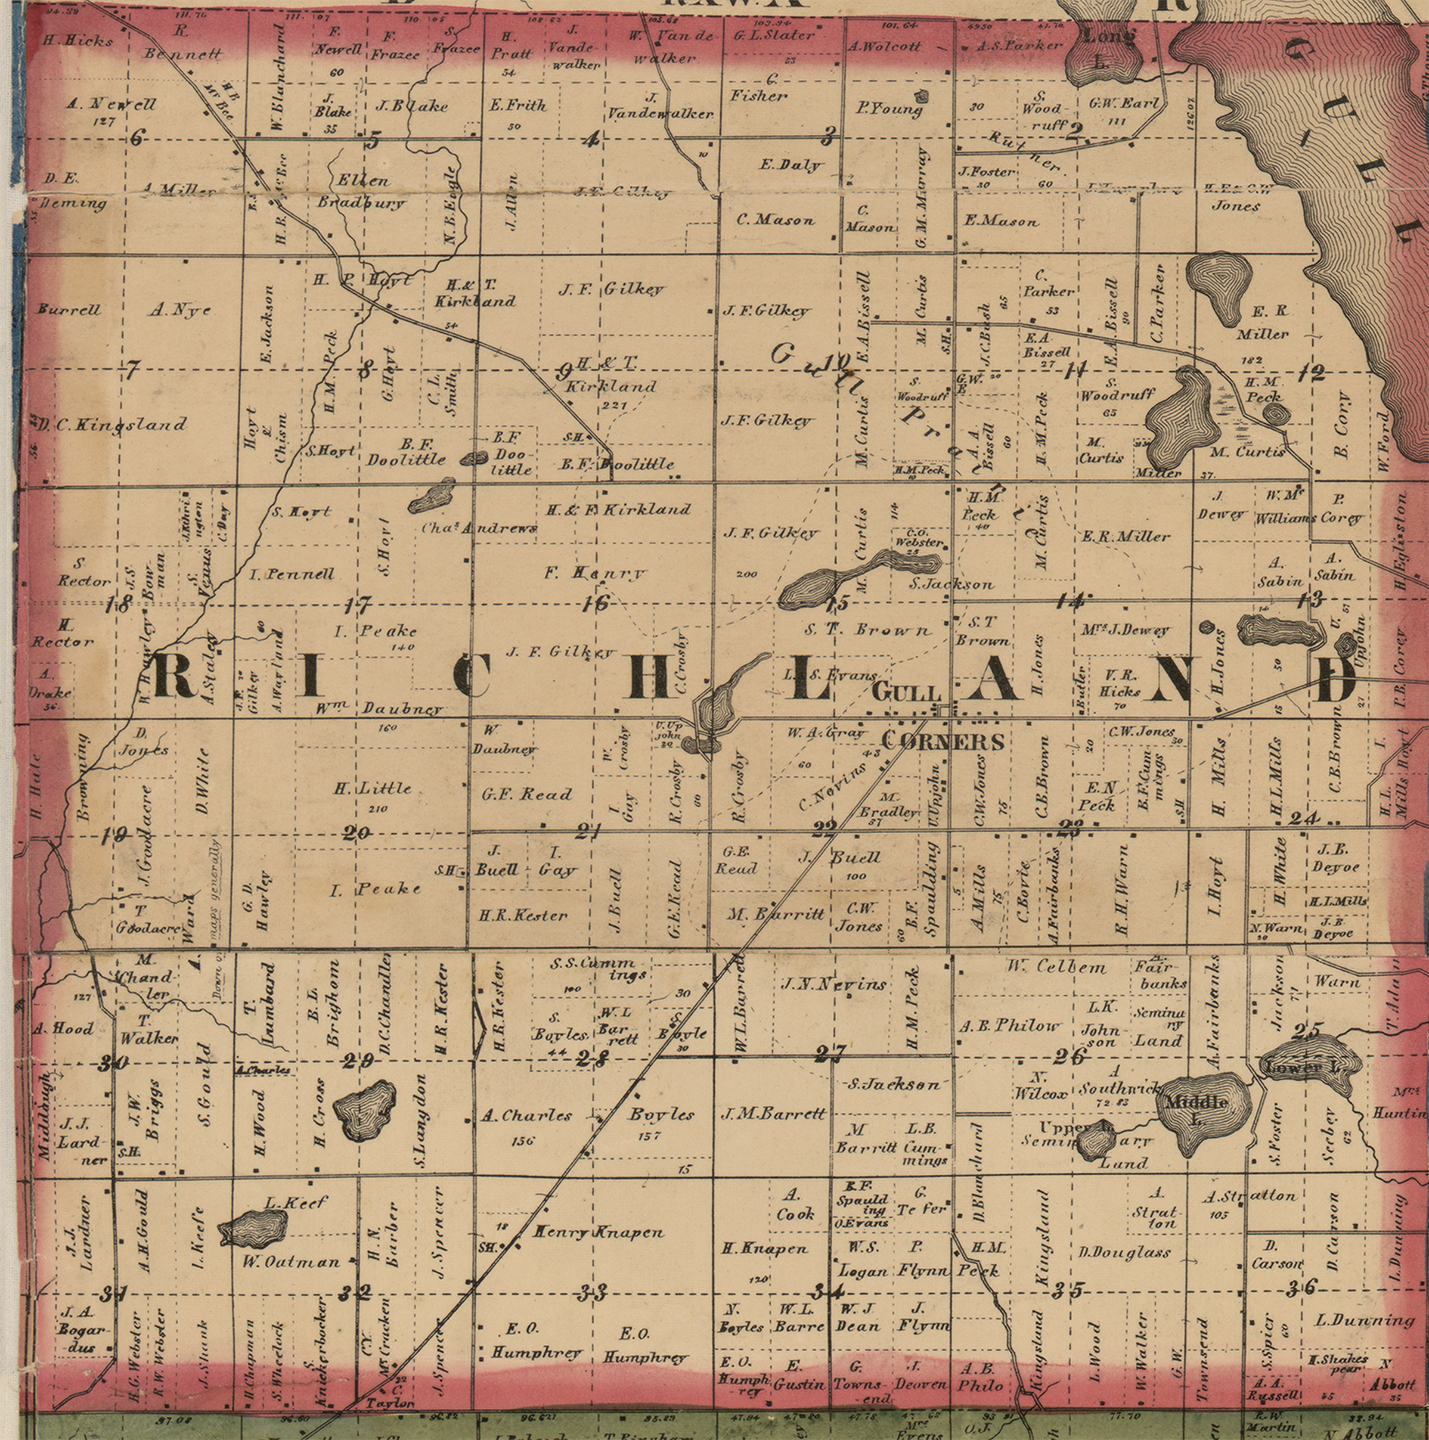 1861 Richland Township Michigan landownership map